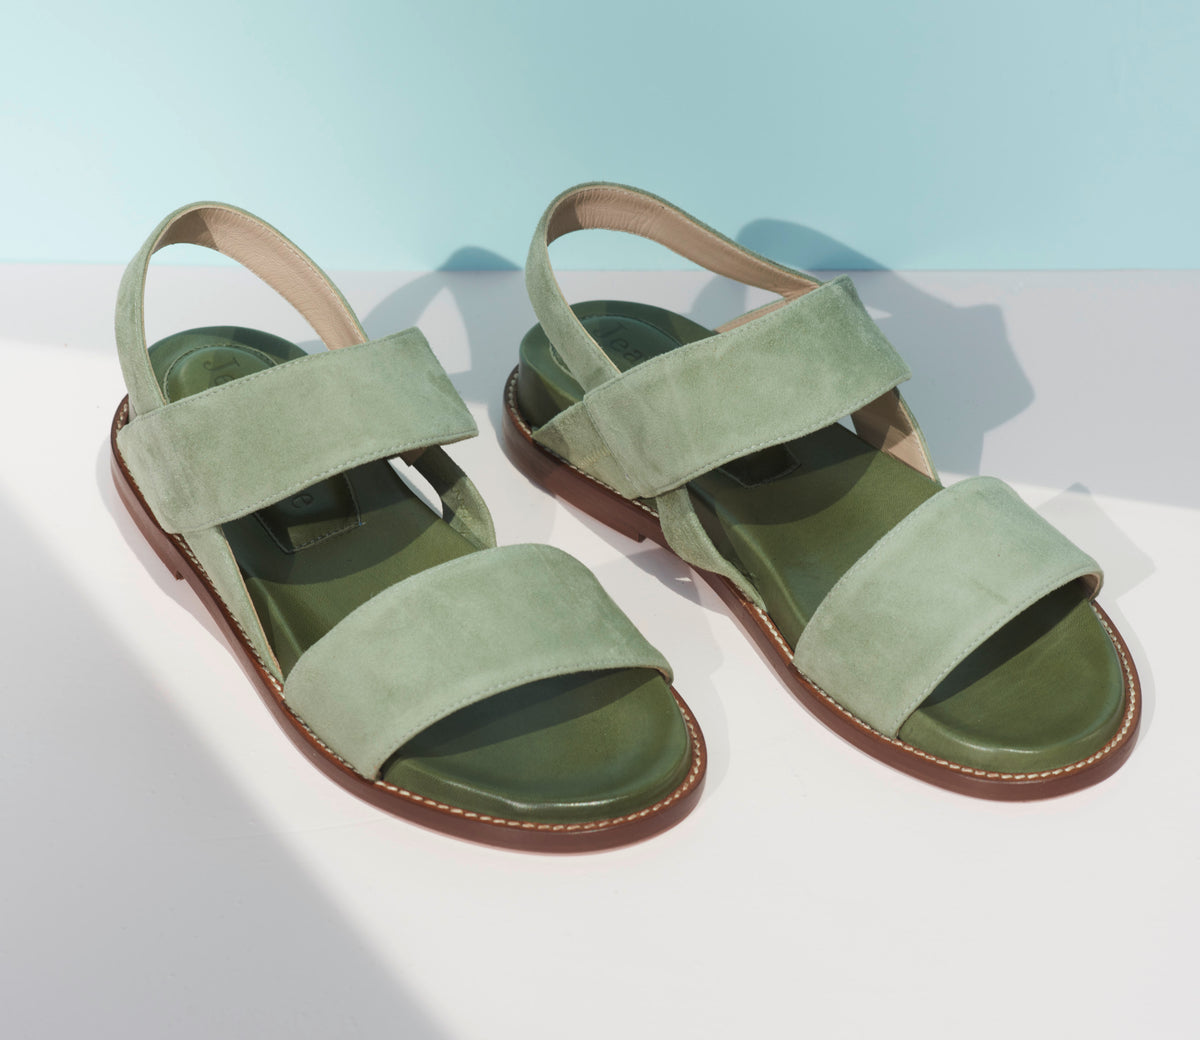 Jean Maroe - Sandalette aus Leder in grün